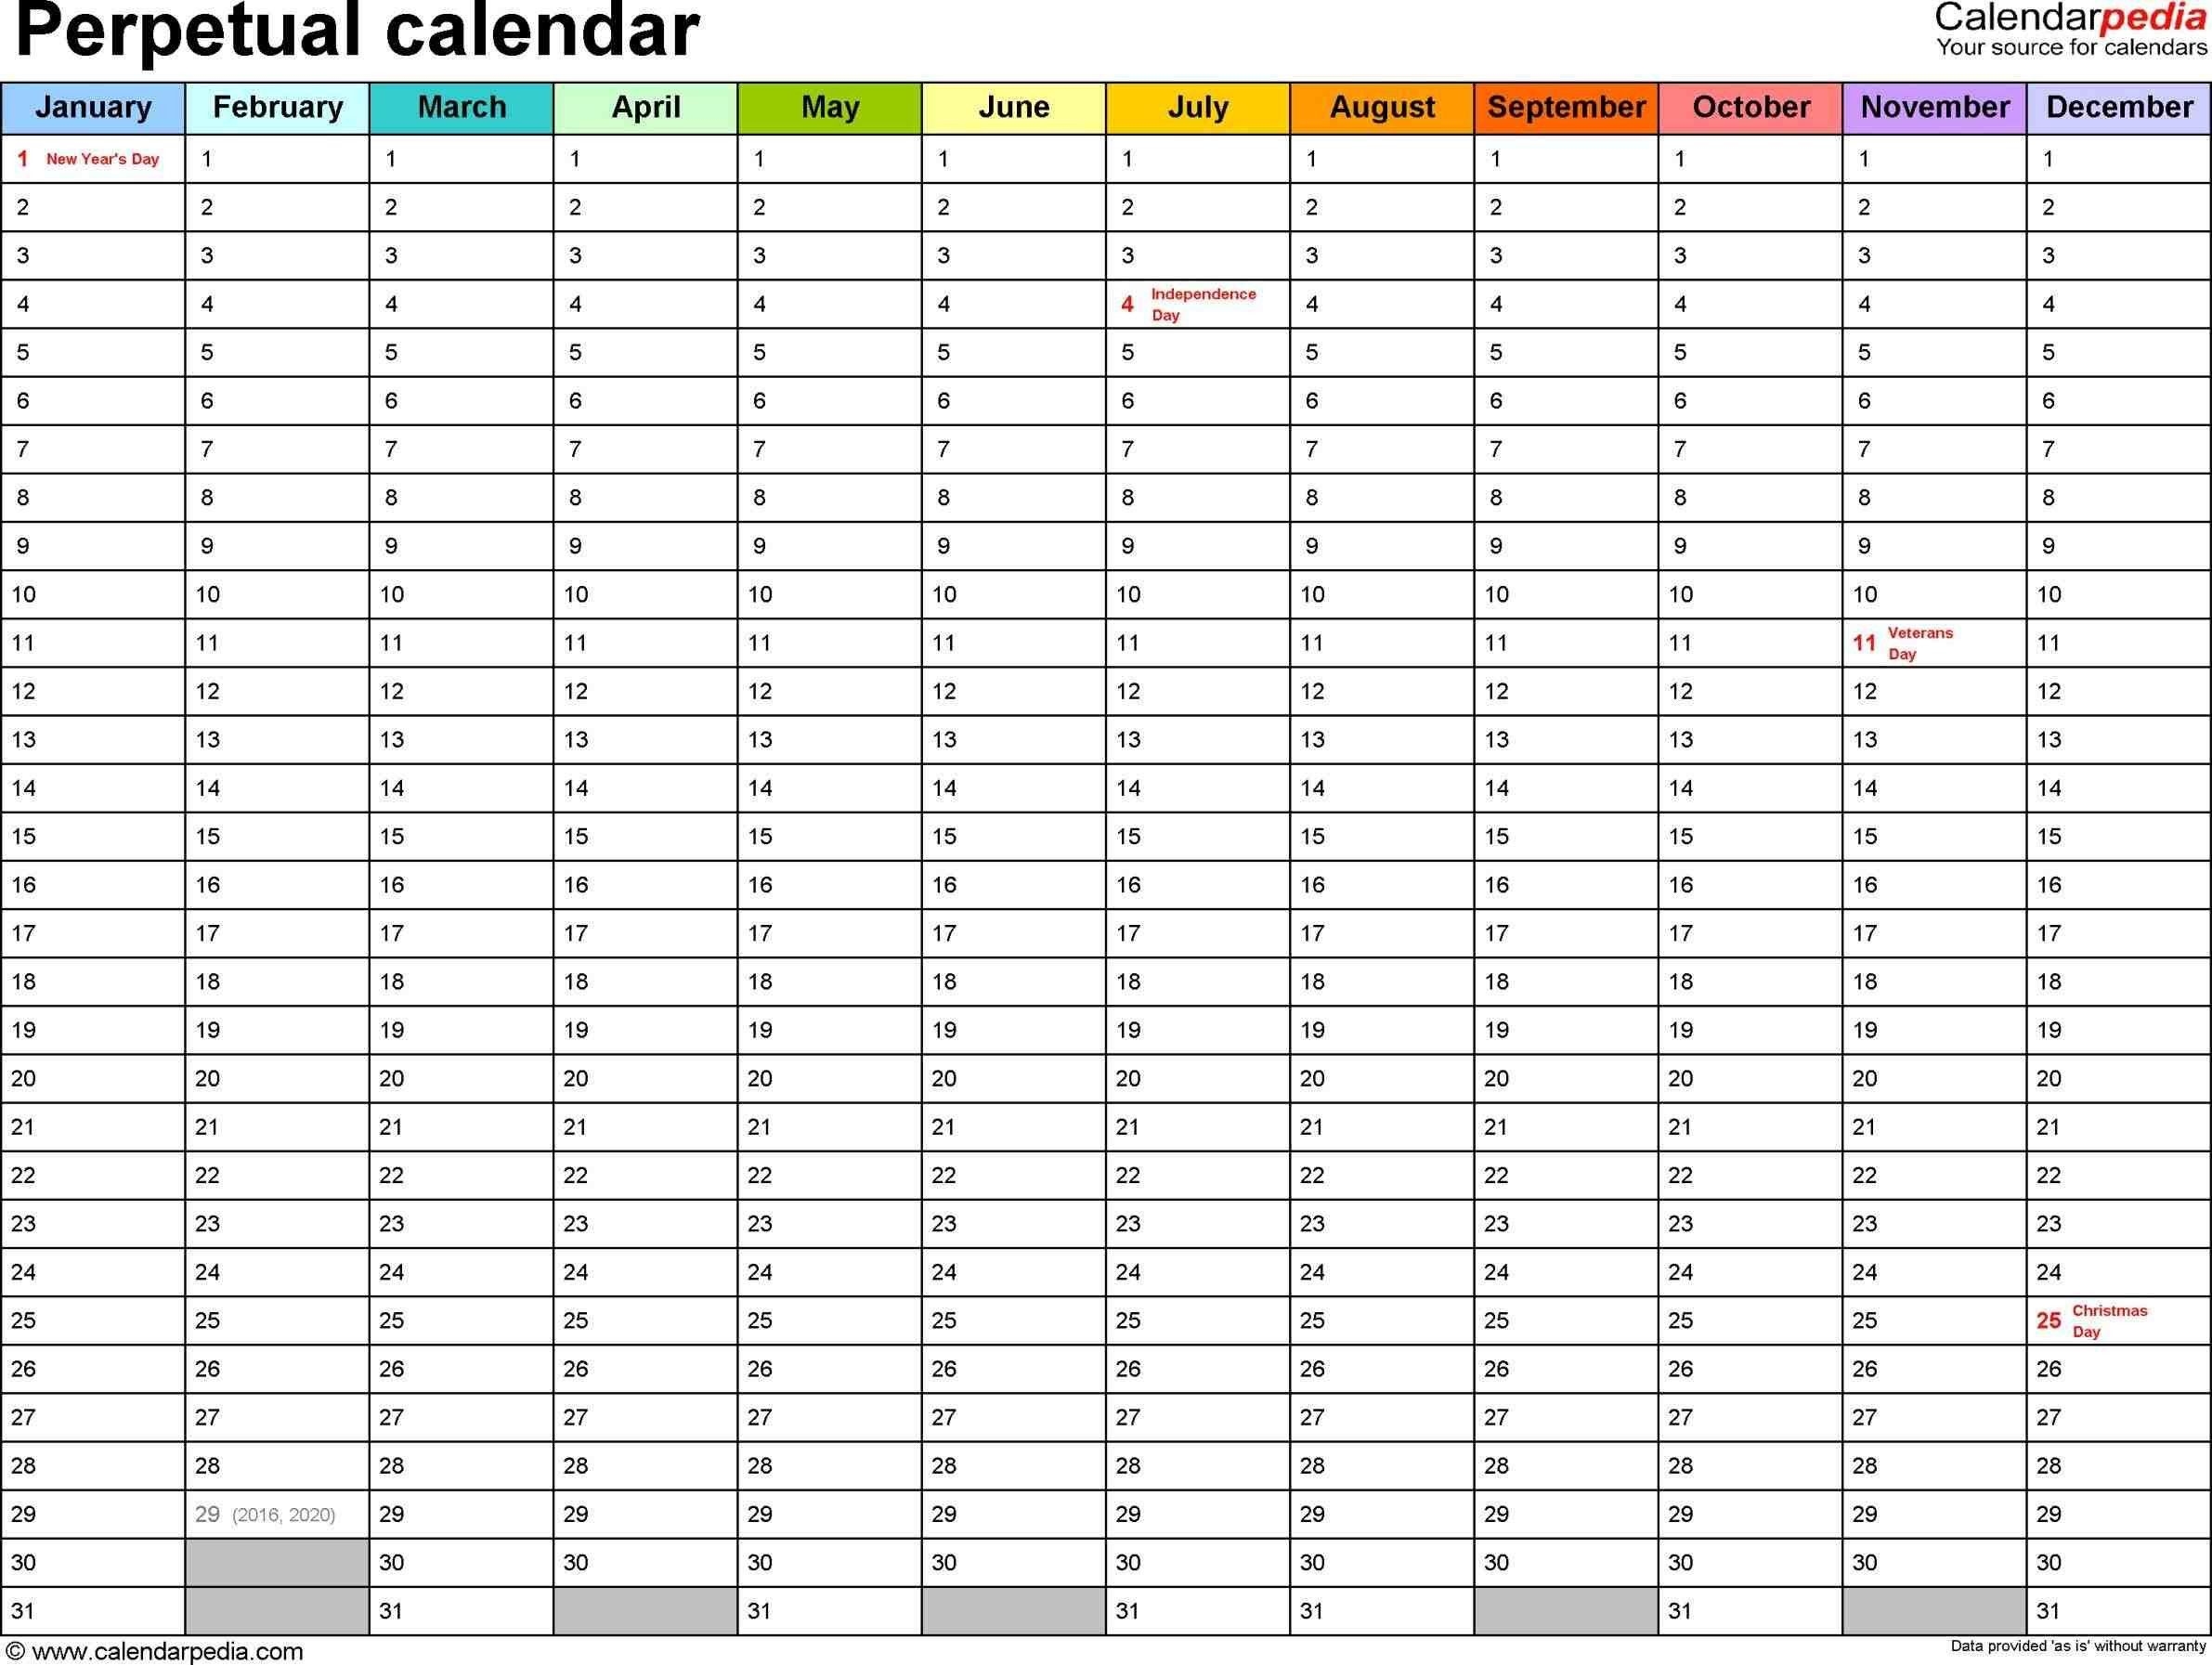 001 20Schedule Template Hourly Agenda20Cel Printable-Hourly Calendar Template 2020